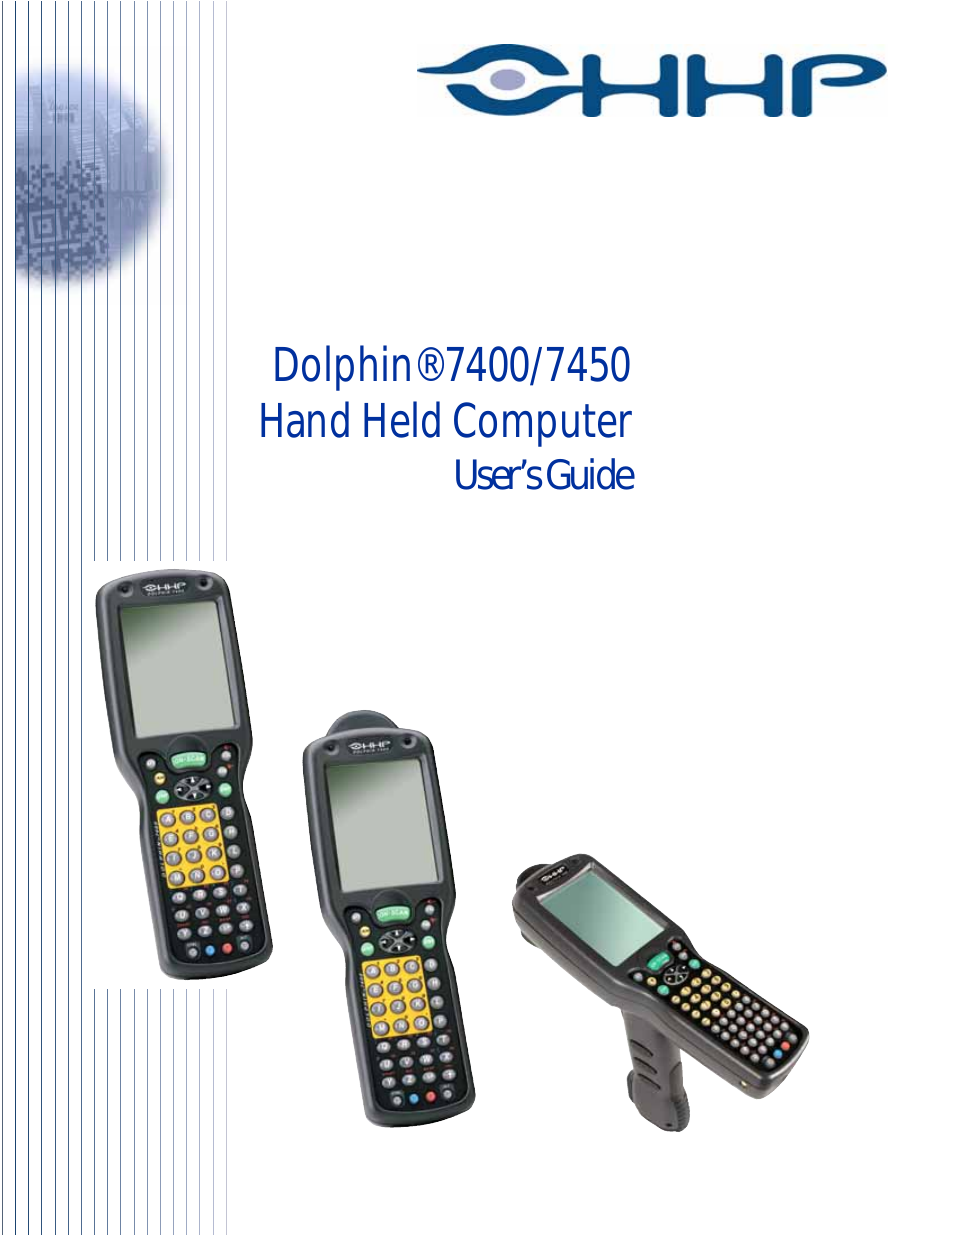 Hand Held Computer Dolphin 7400